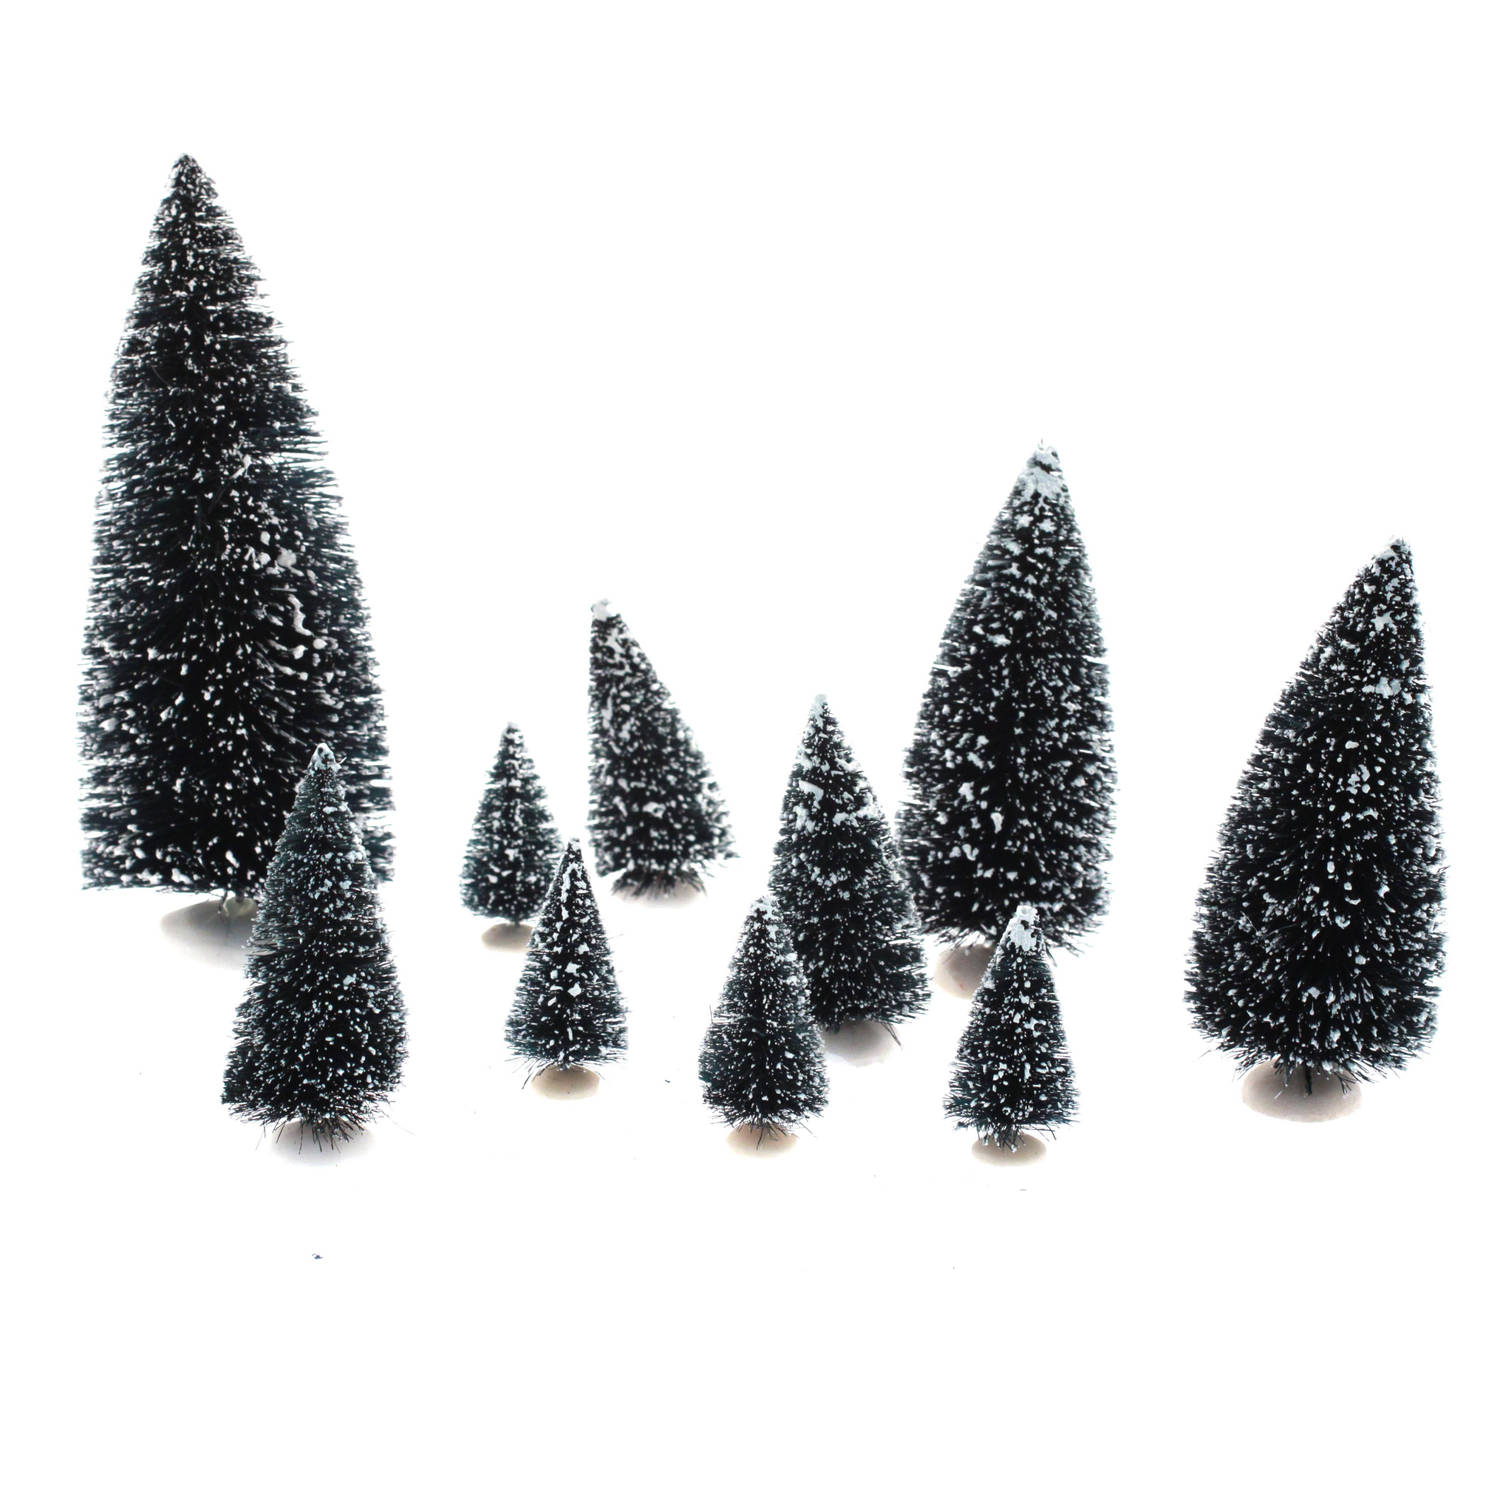 Feeric lights and christmas kerstdorp miniatuur boompjes 10x stuks Kerstdorpen